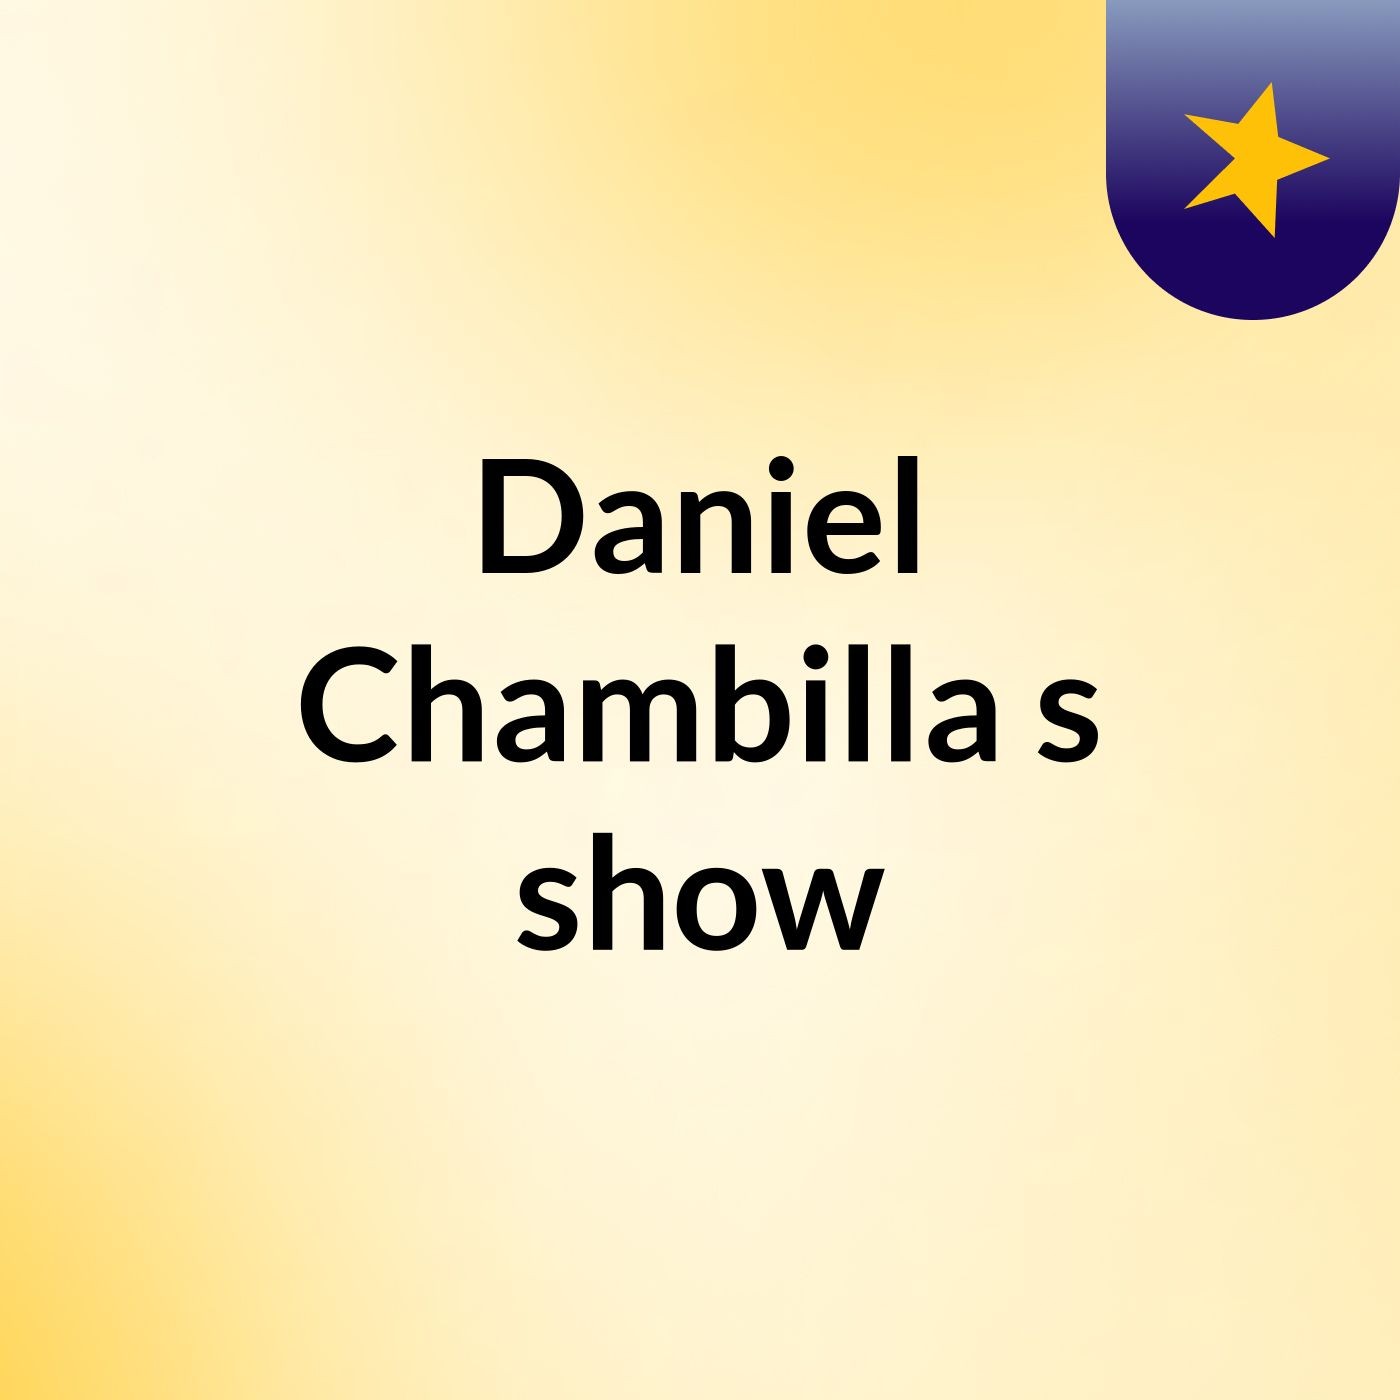 Daniel Chambilla's show